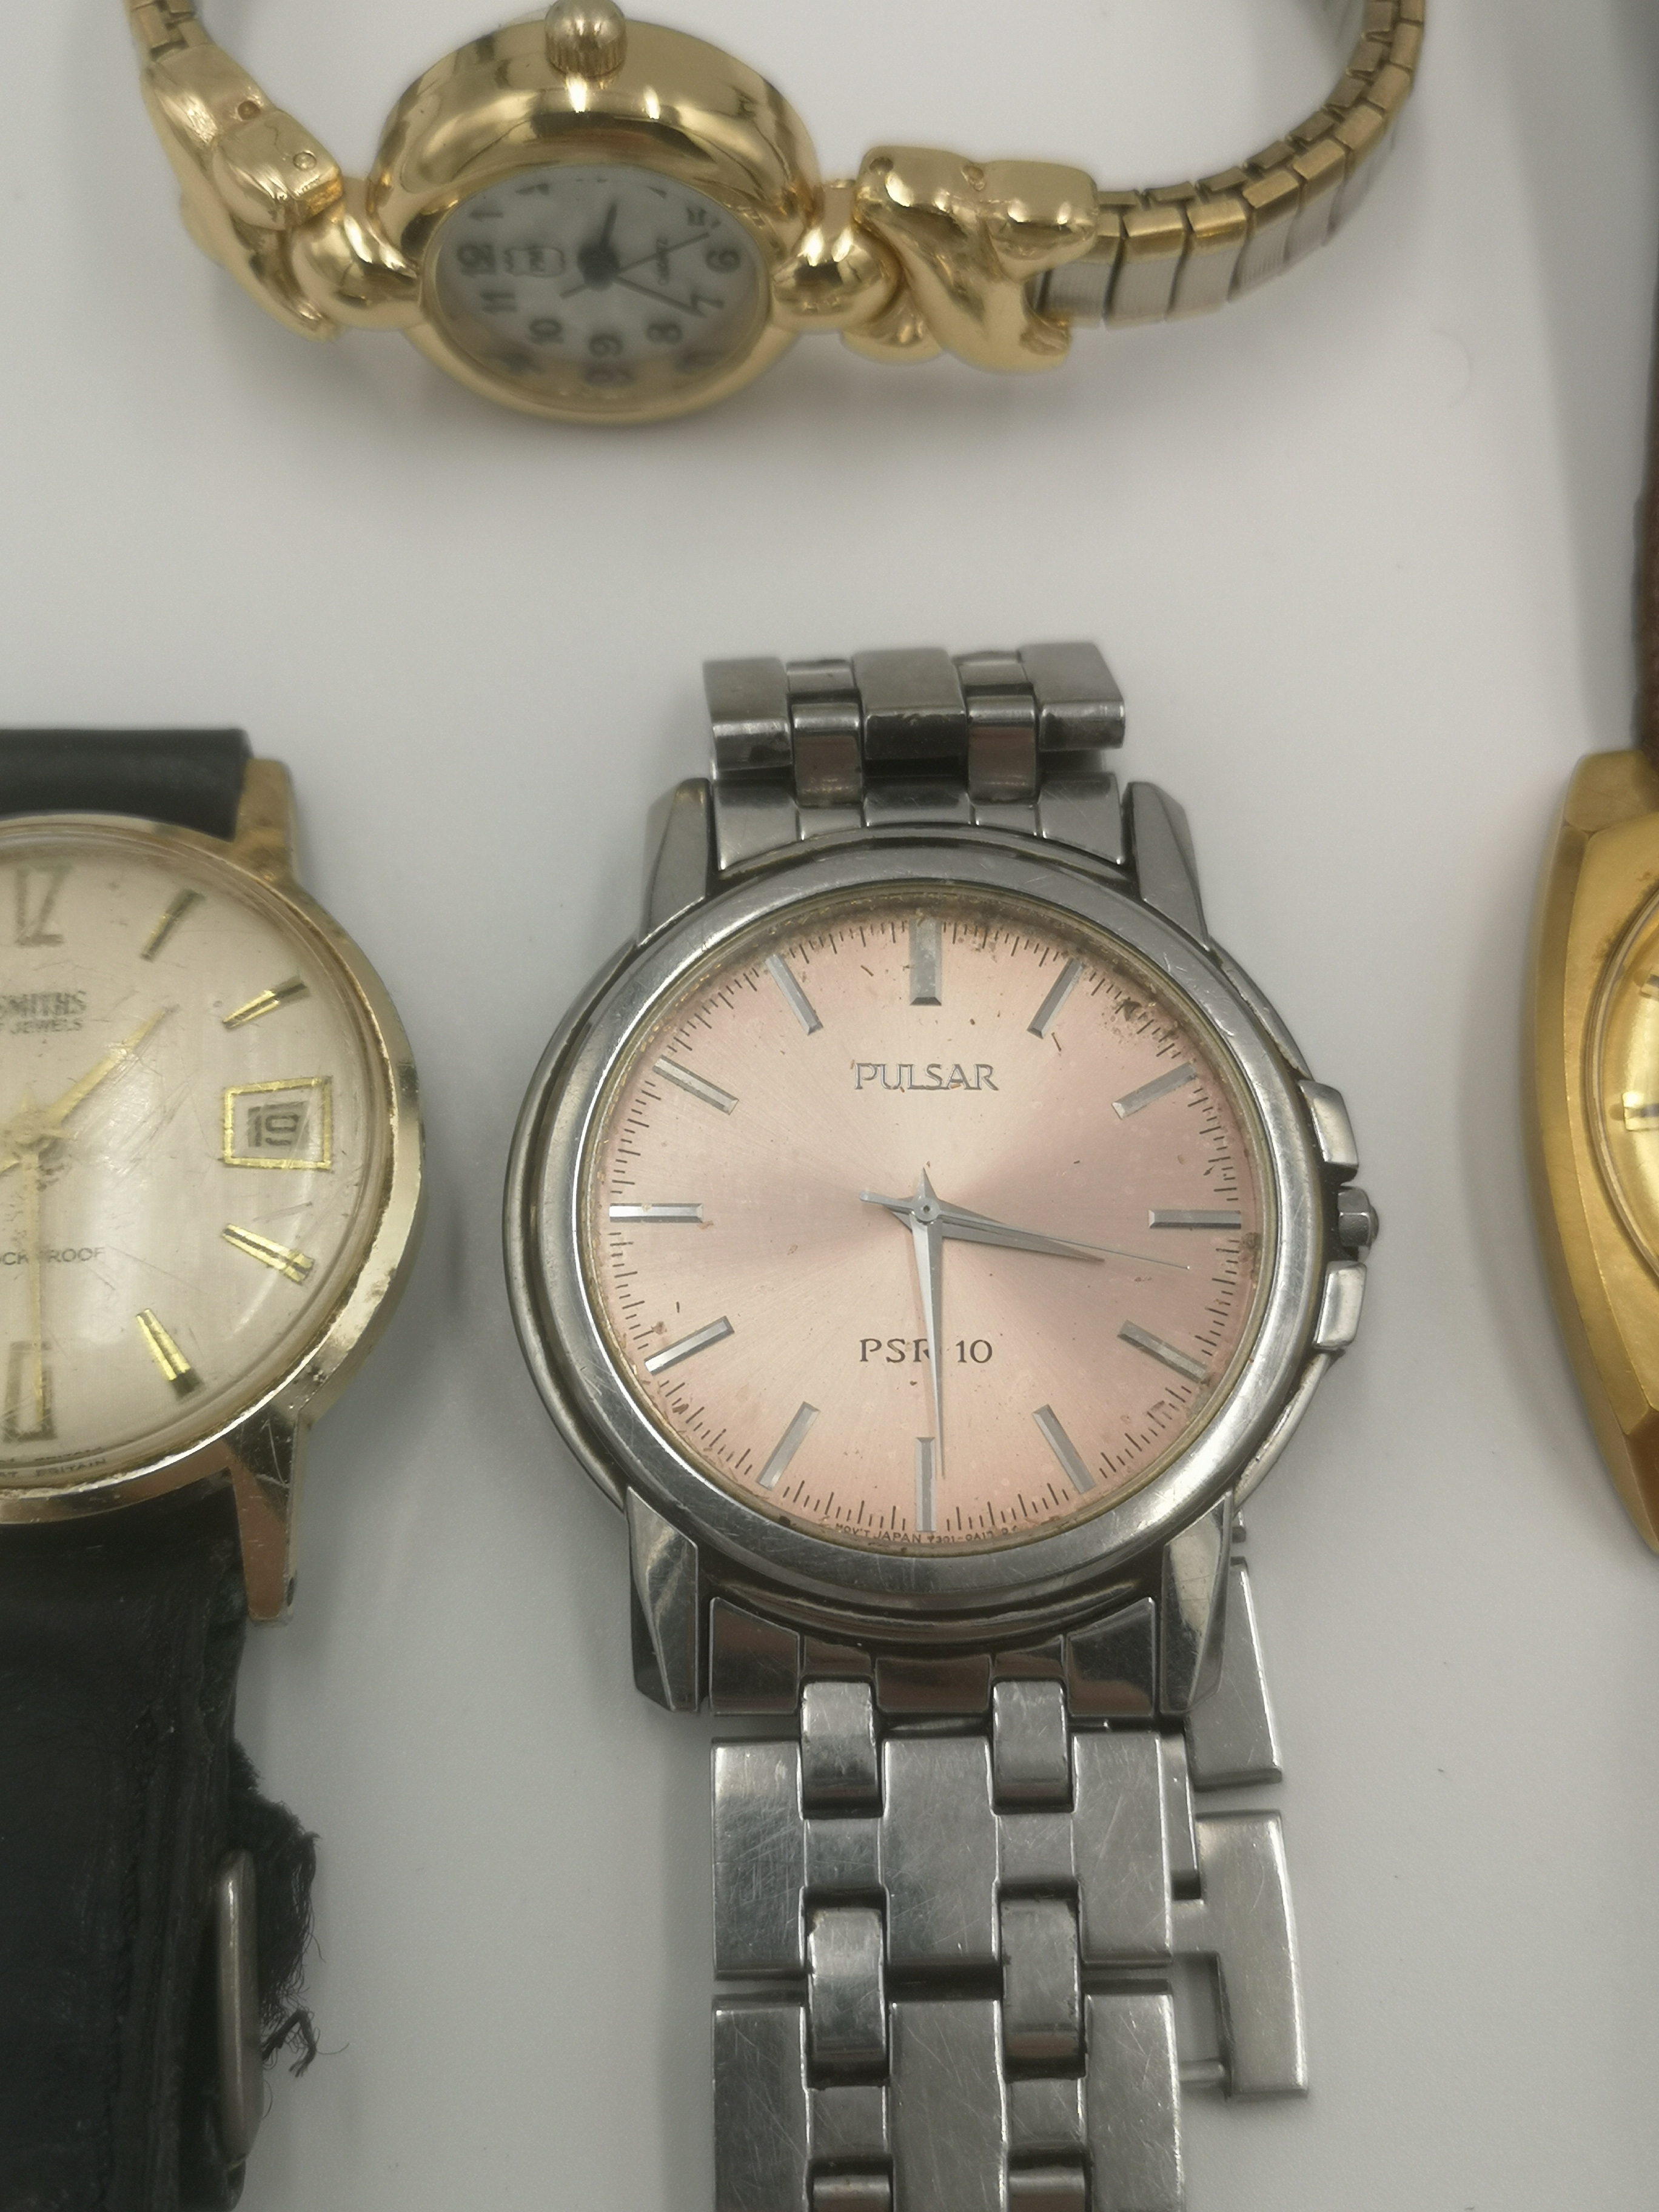 Roamer Premier Incabloc wrist watch in 9ct gold case - Image 4 of 6